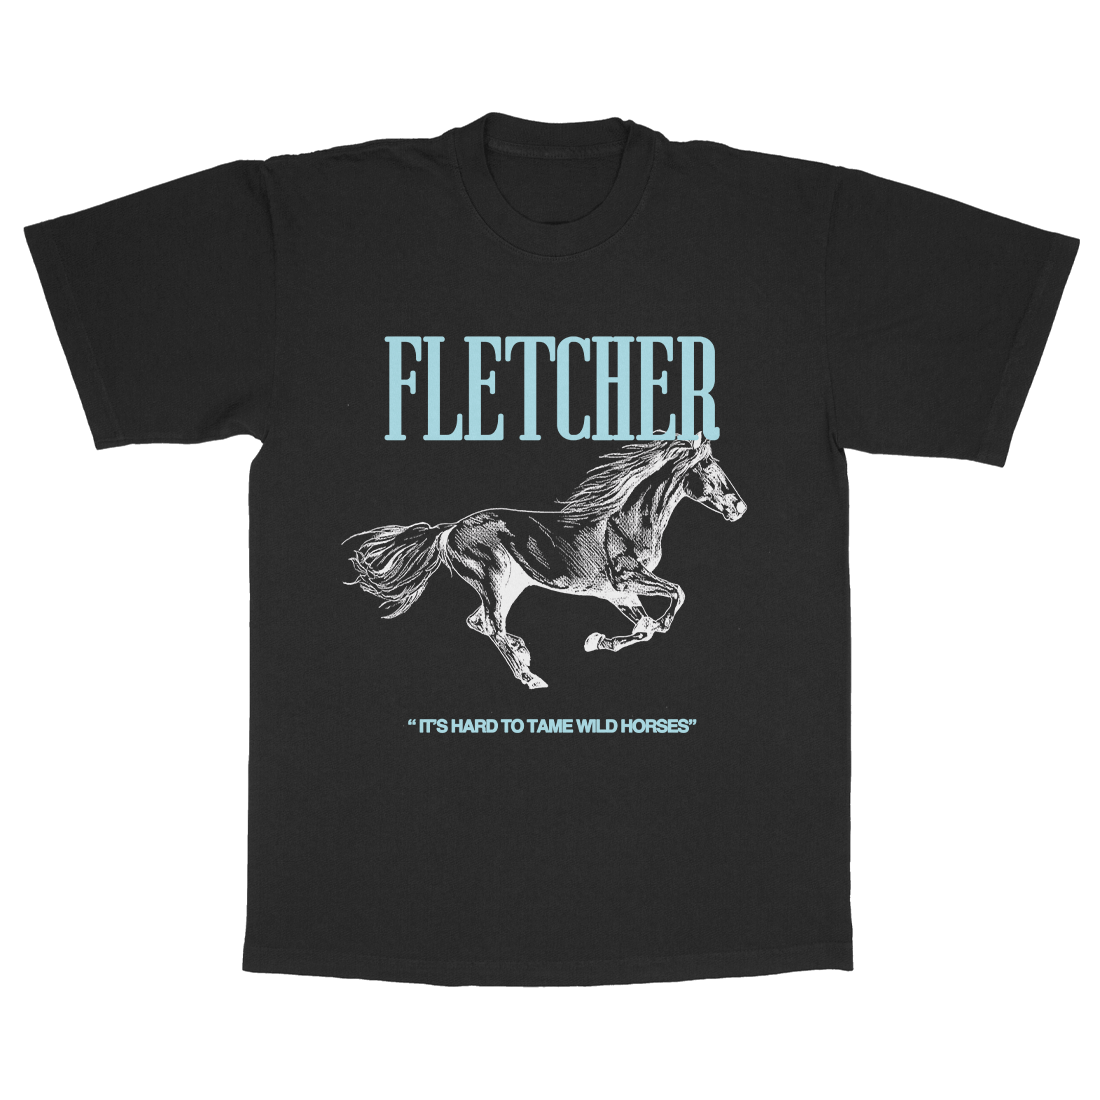 FLETCHER - IT'S HARD TO TAME WILD HORSES Tee